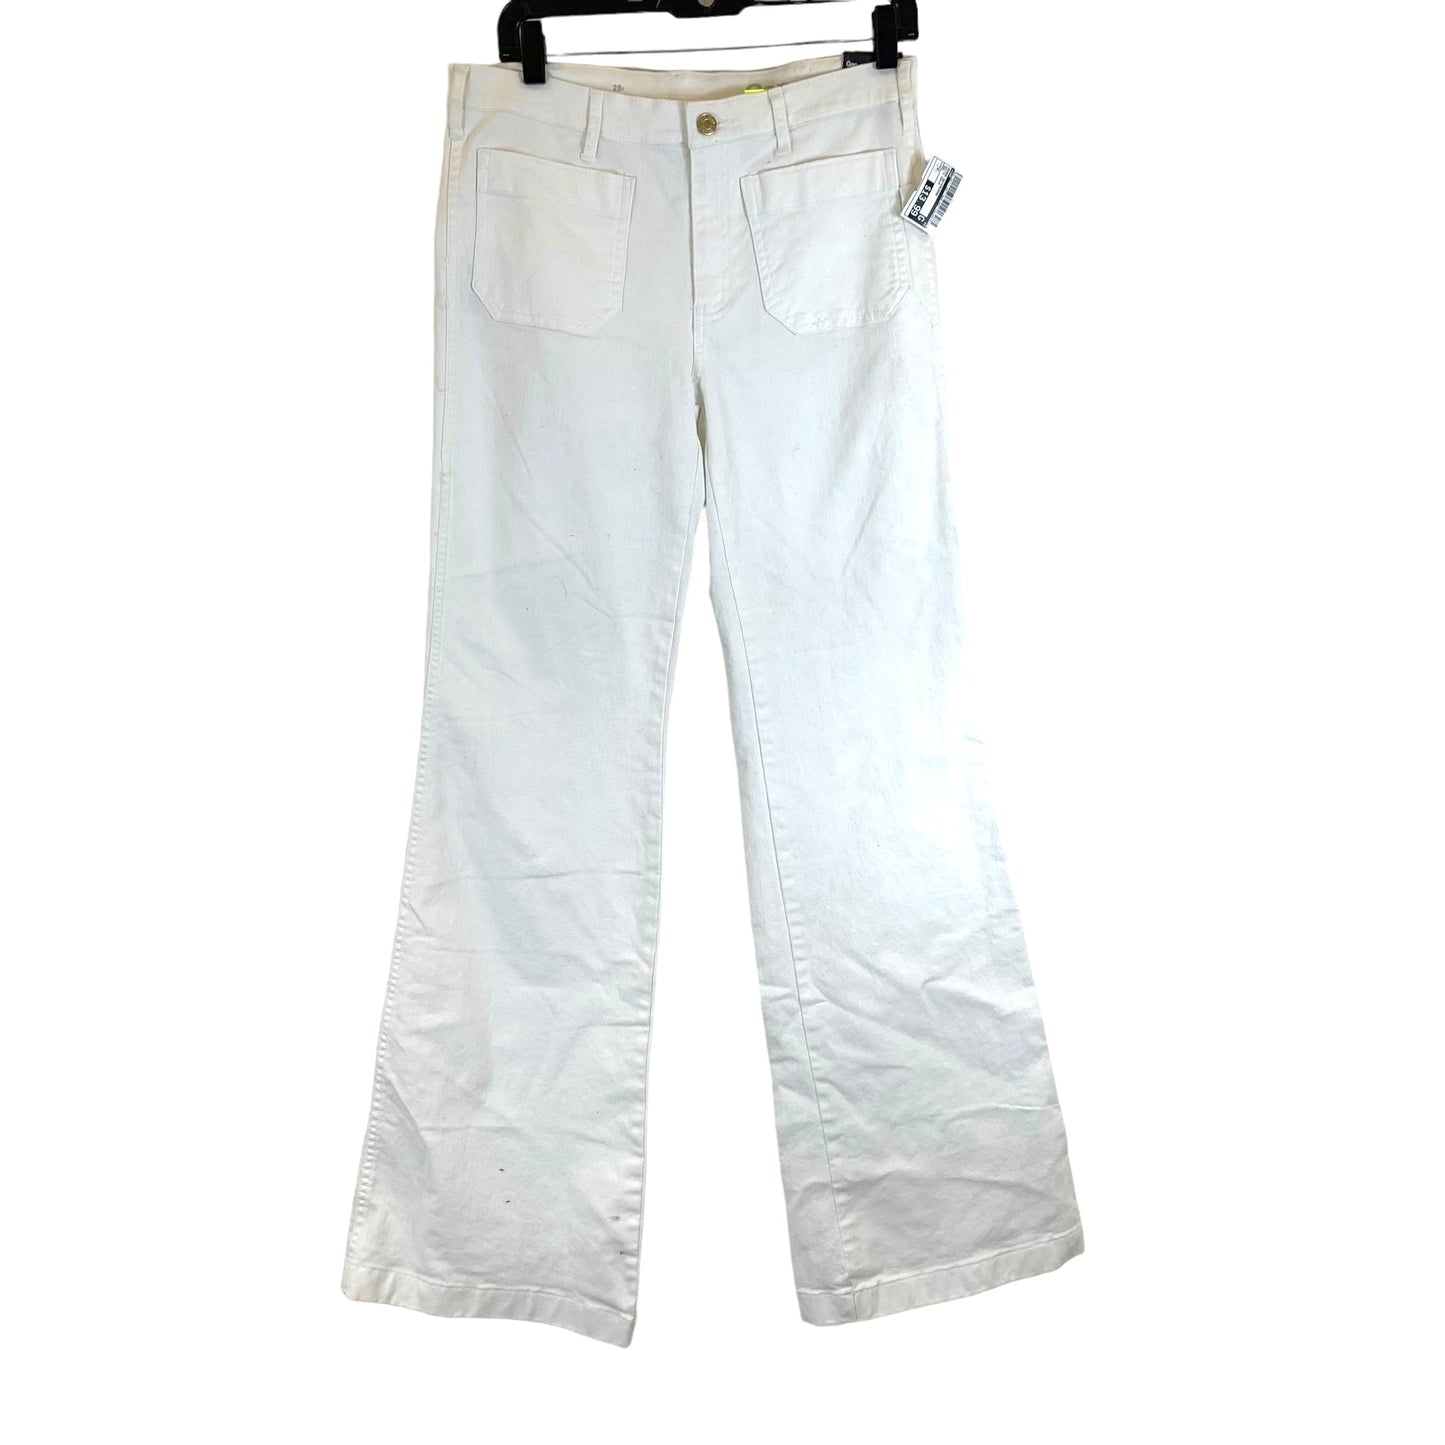 White Denim Jeans Boyfriend Gap, Size 6